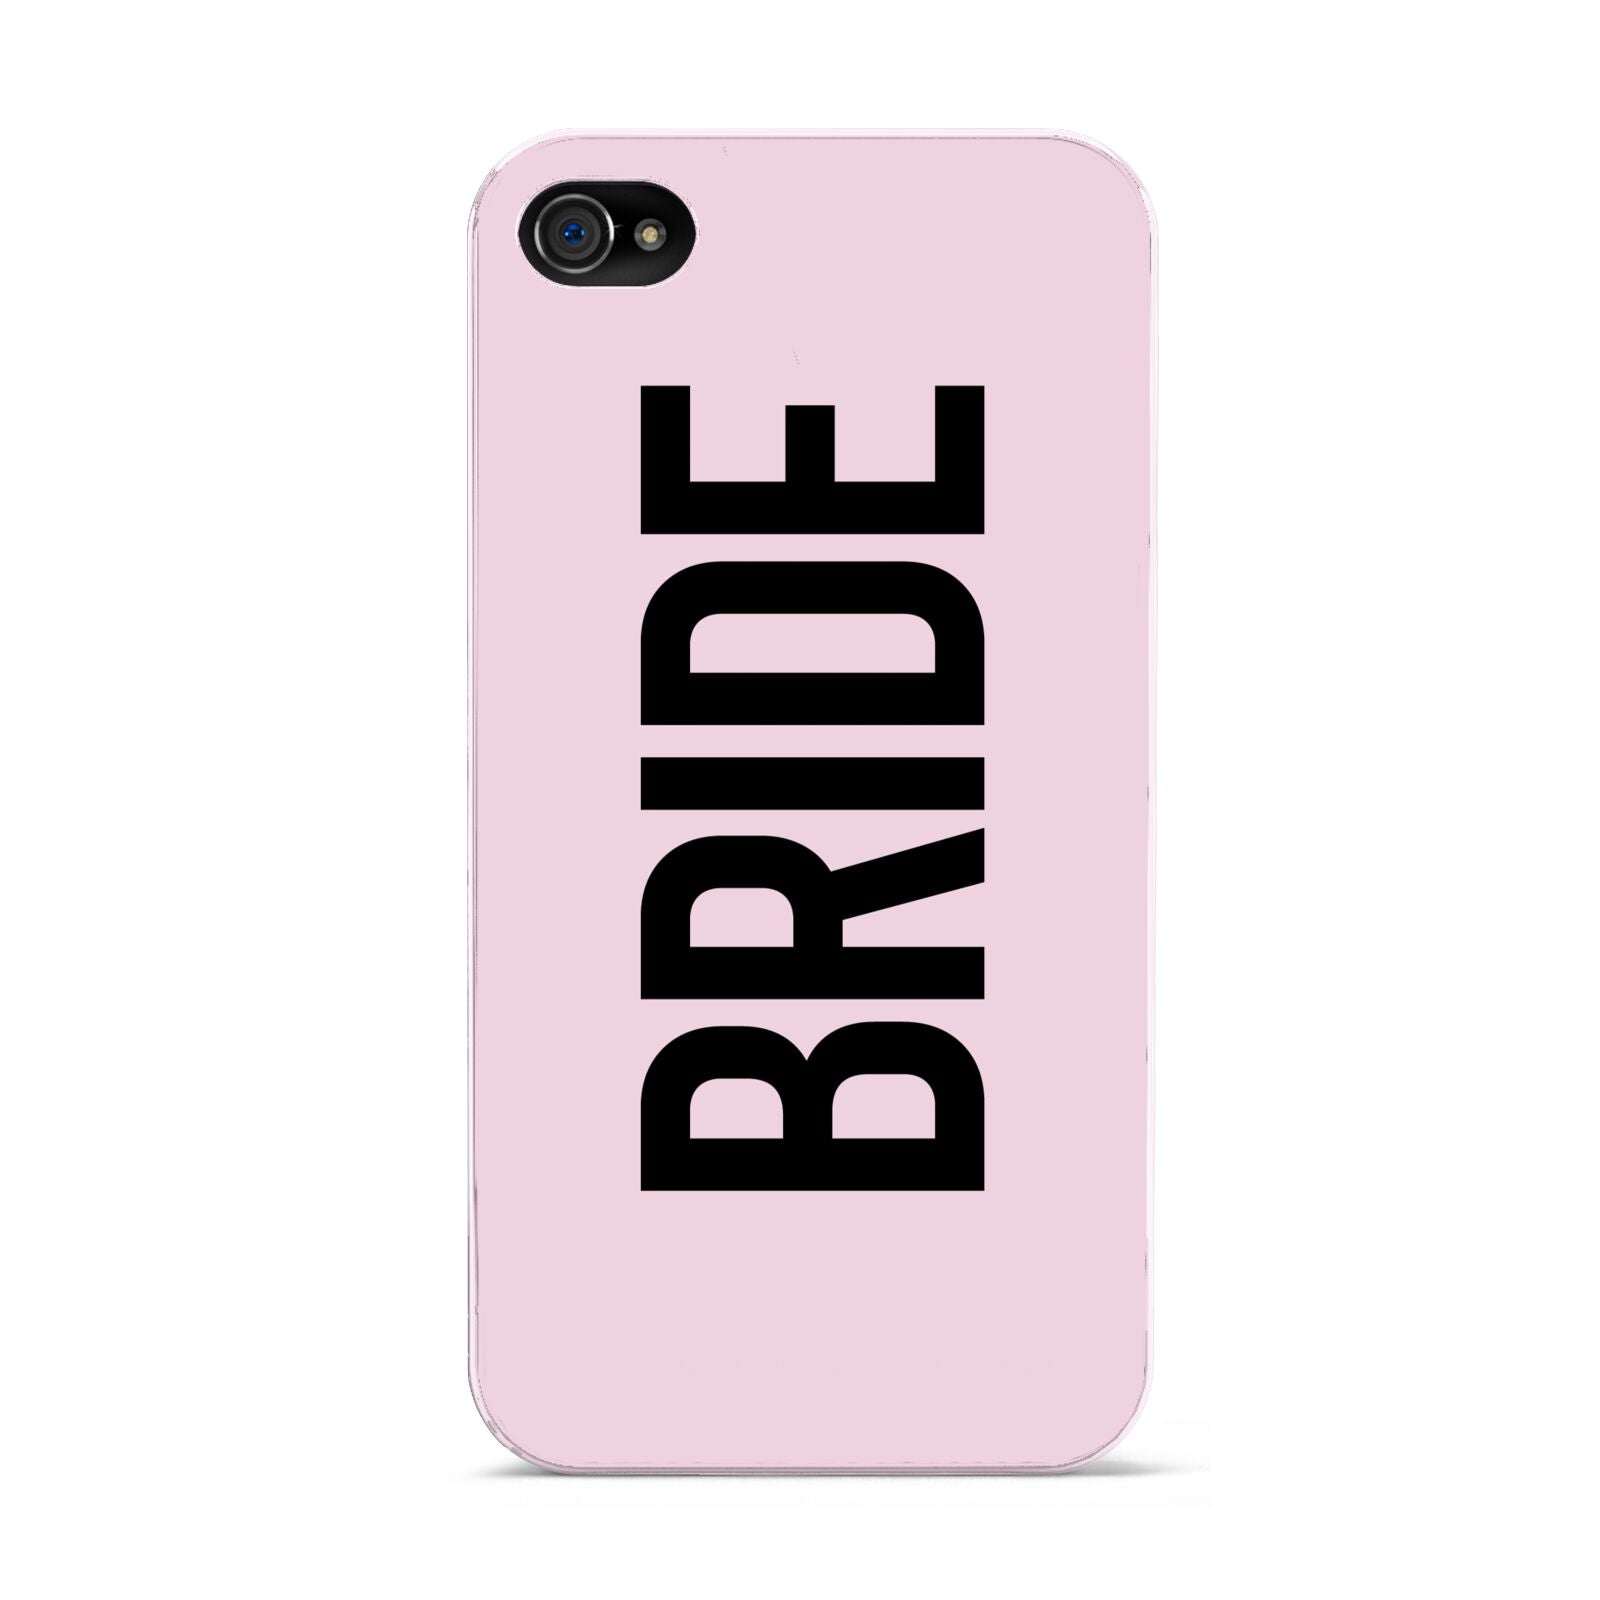 Bride Apple iPhone 4s Case